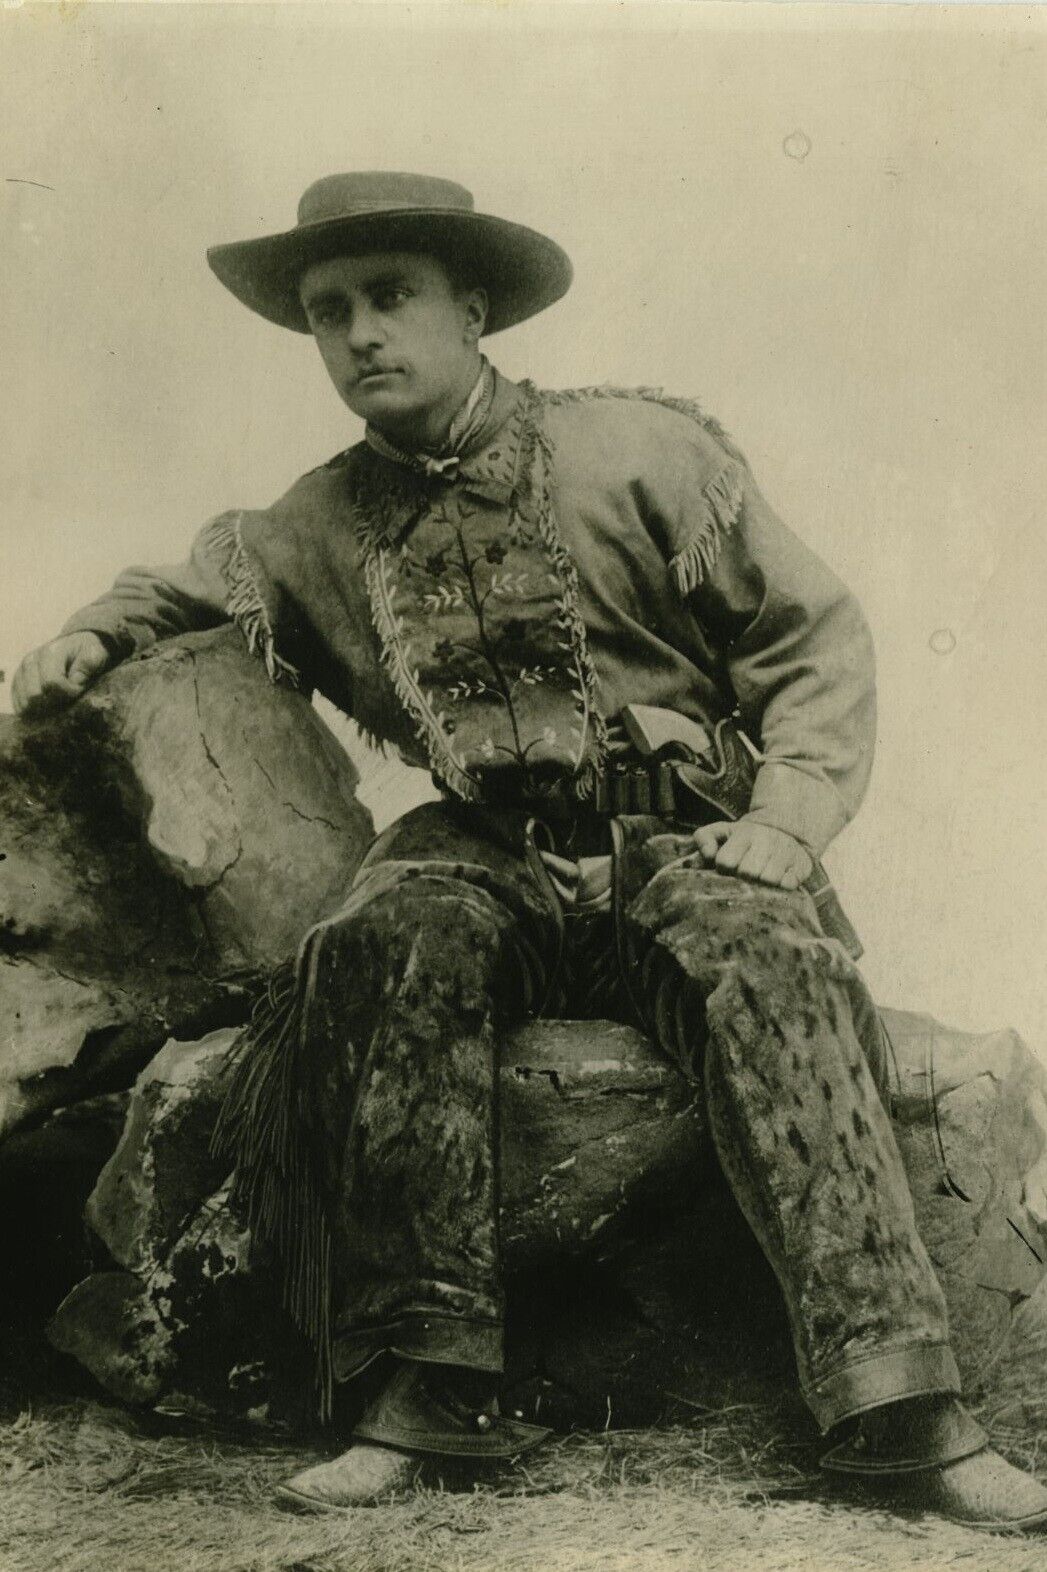 Teddy Roosevelt dressed as a Cowboy - 1883 - 4 x 6 Photo Print